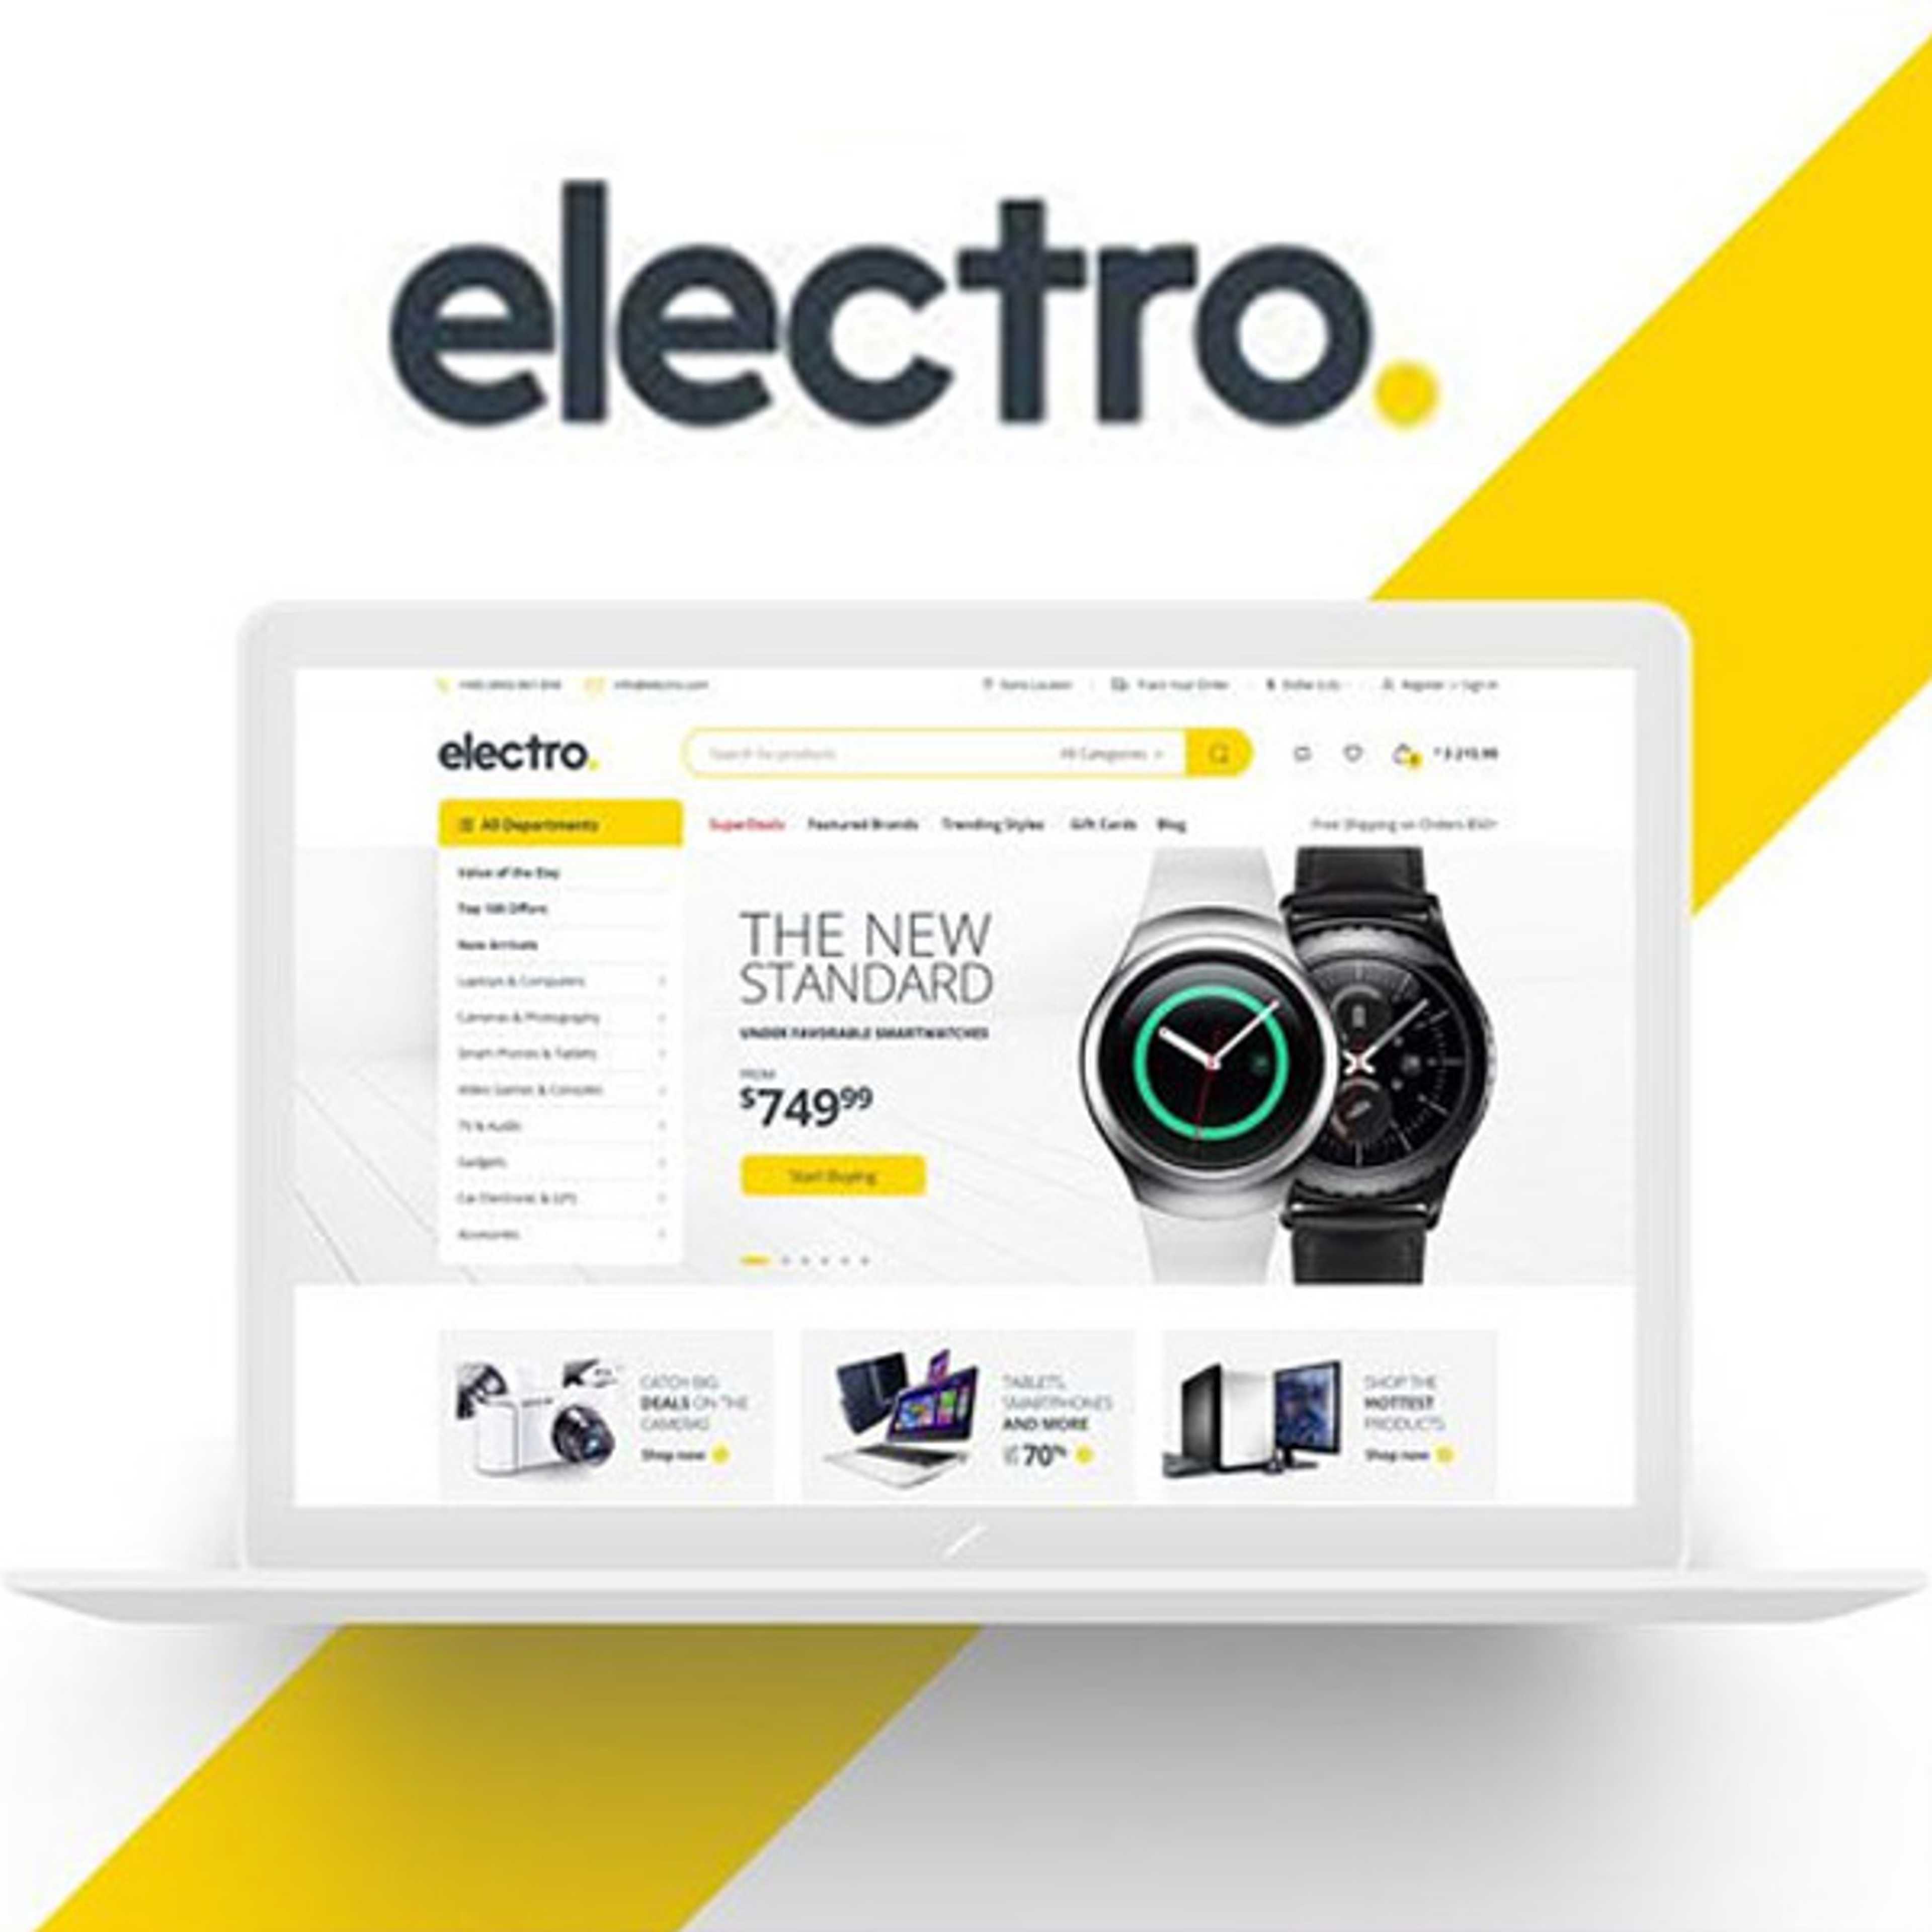 Electro Electronics Store WooCommerce Theme - Wordpress Theme